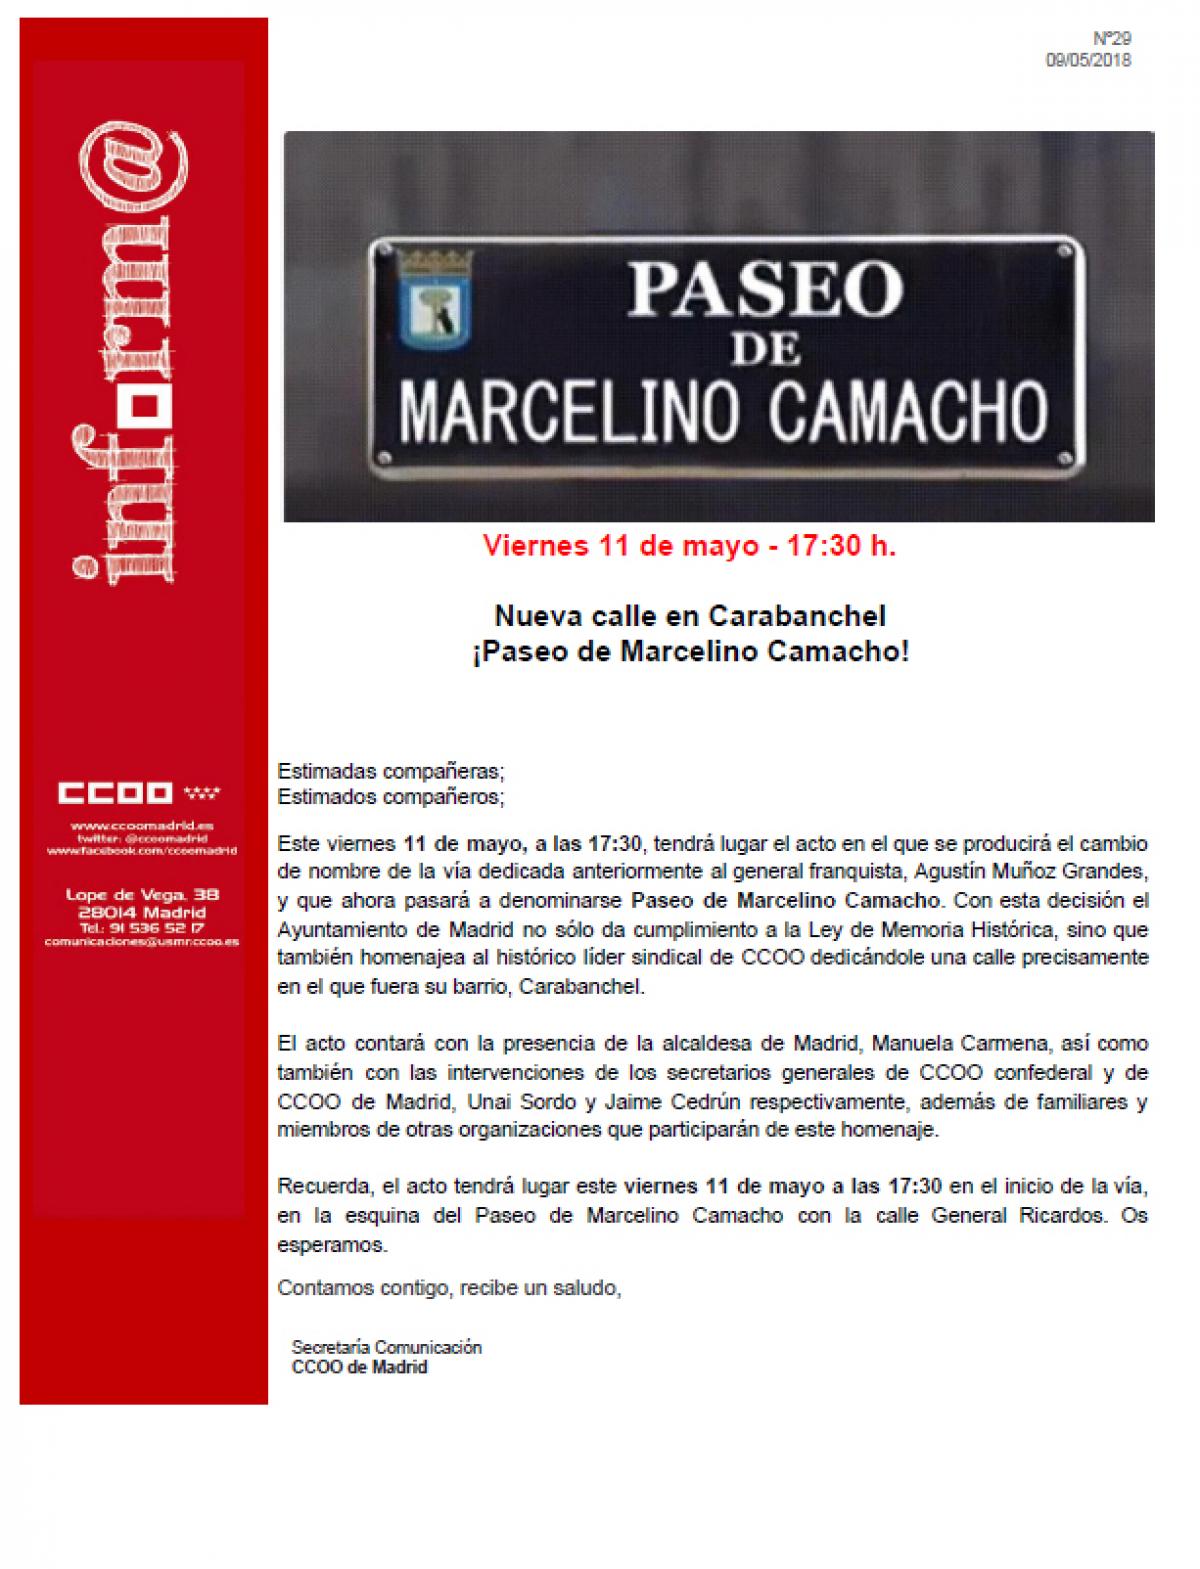 Informa Paseo Marcelino Camacho